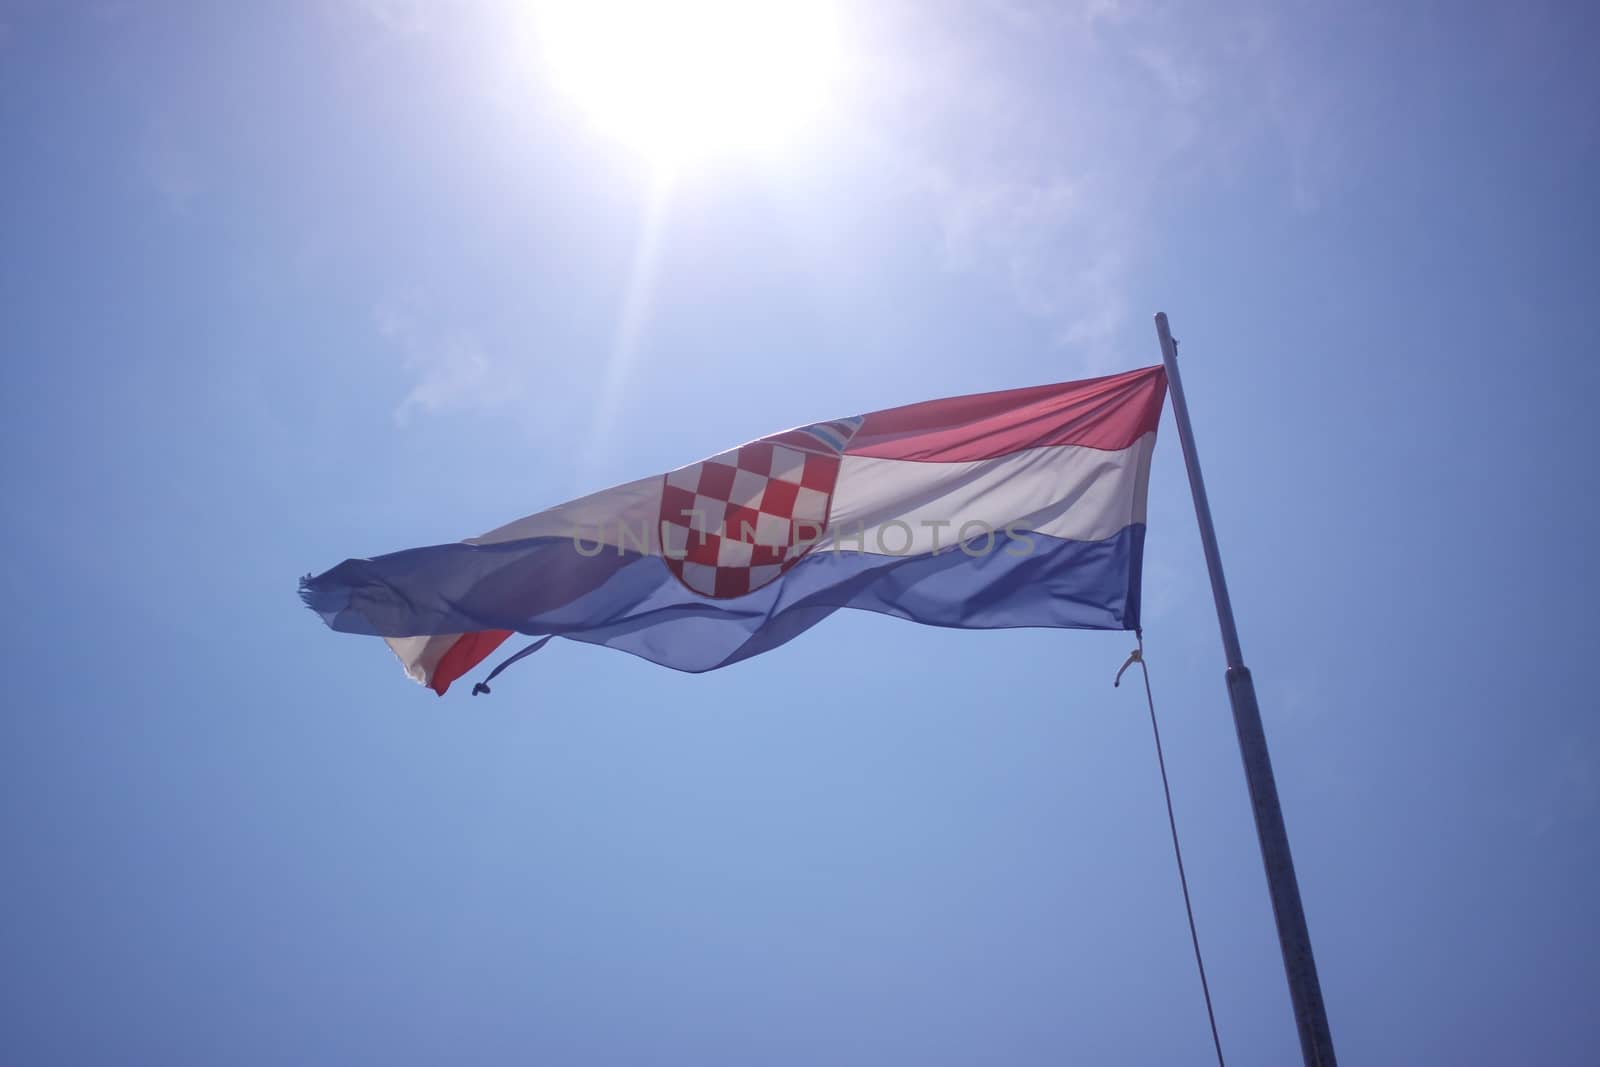 The flag of Croatia on blue sky  by Barbraford